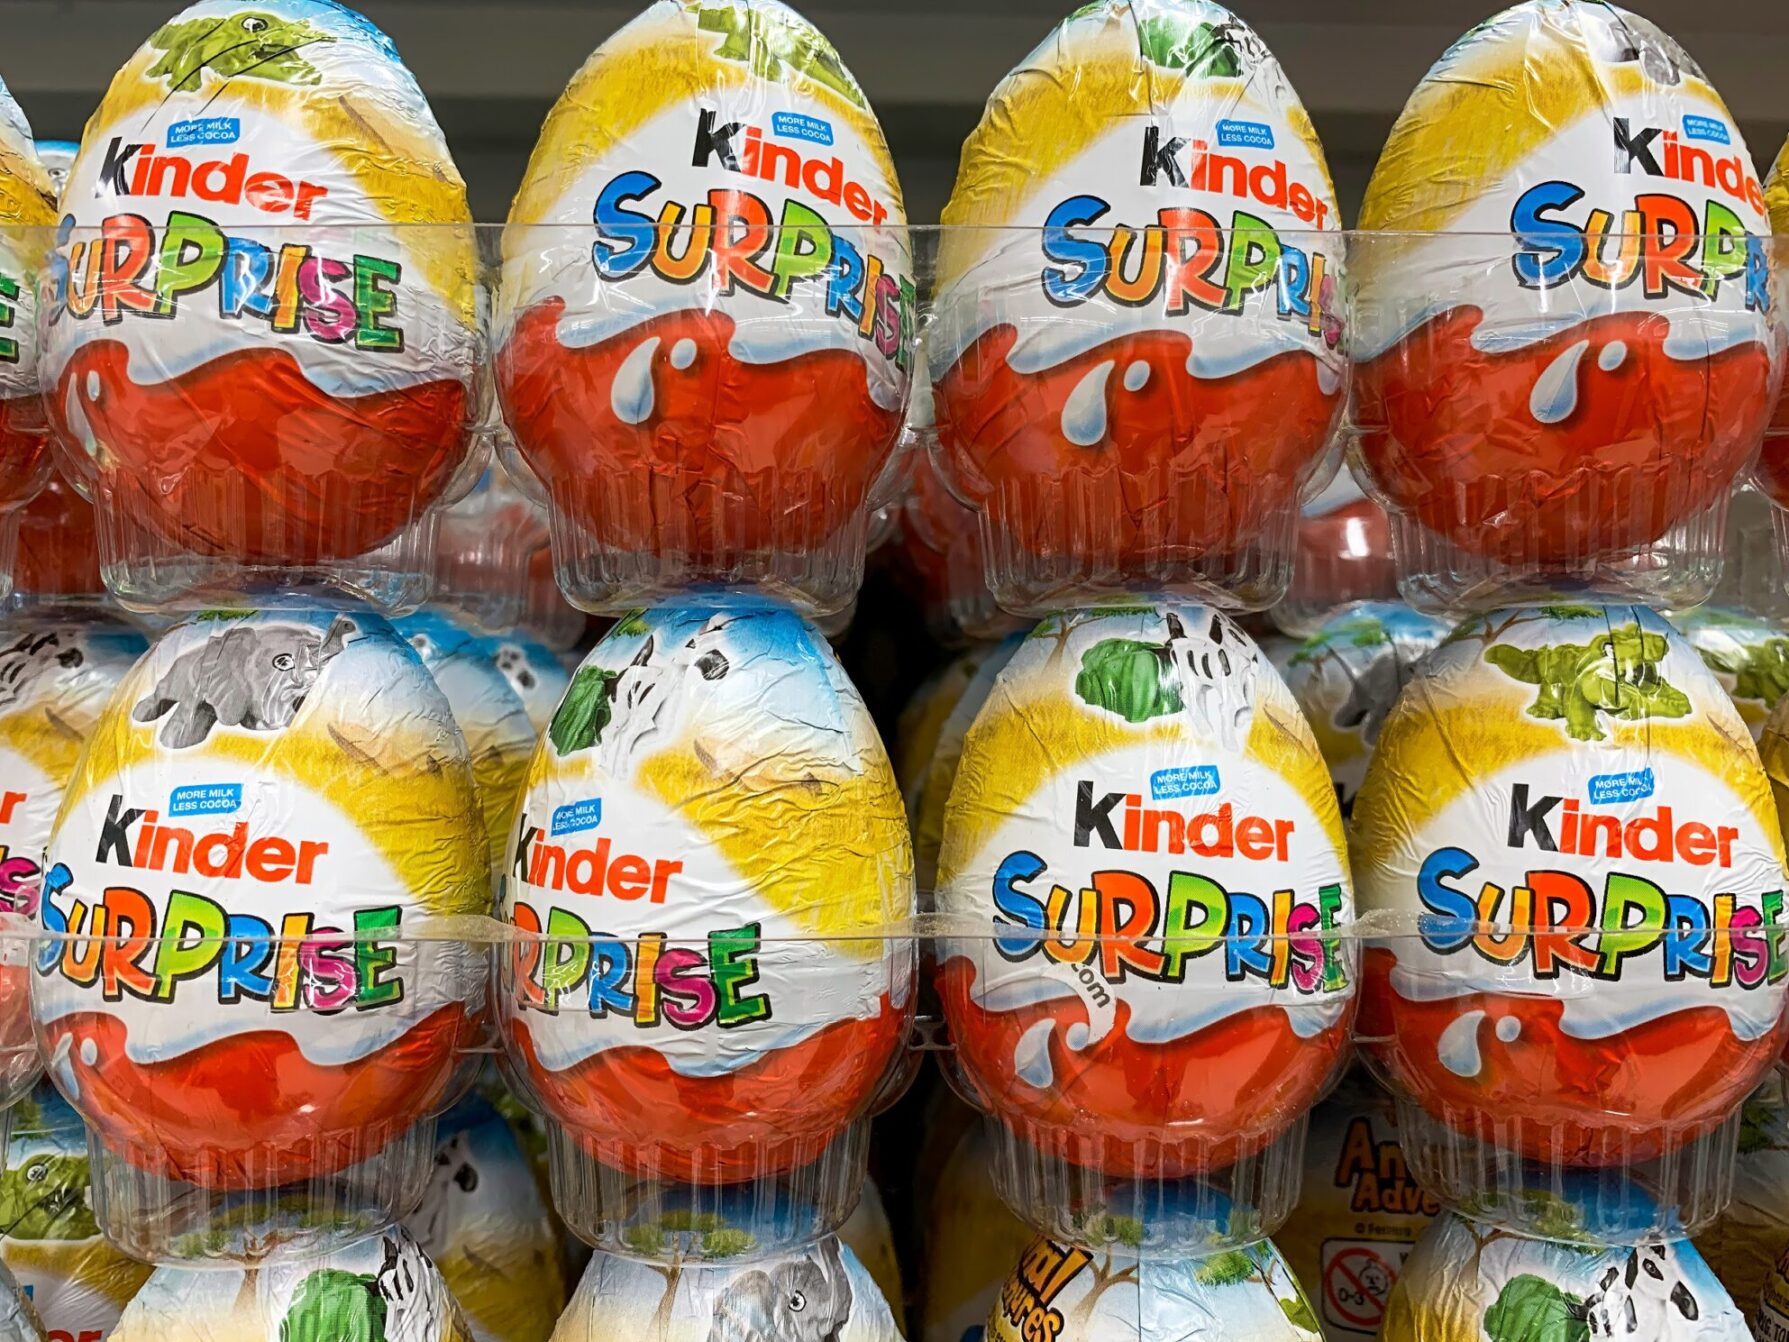 Kinder Surprise eggs recalled in UK over salmonella link